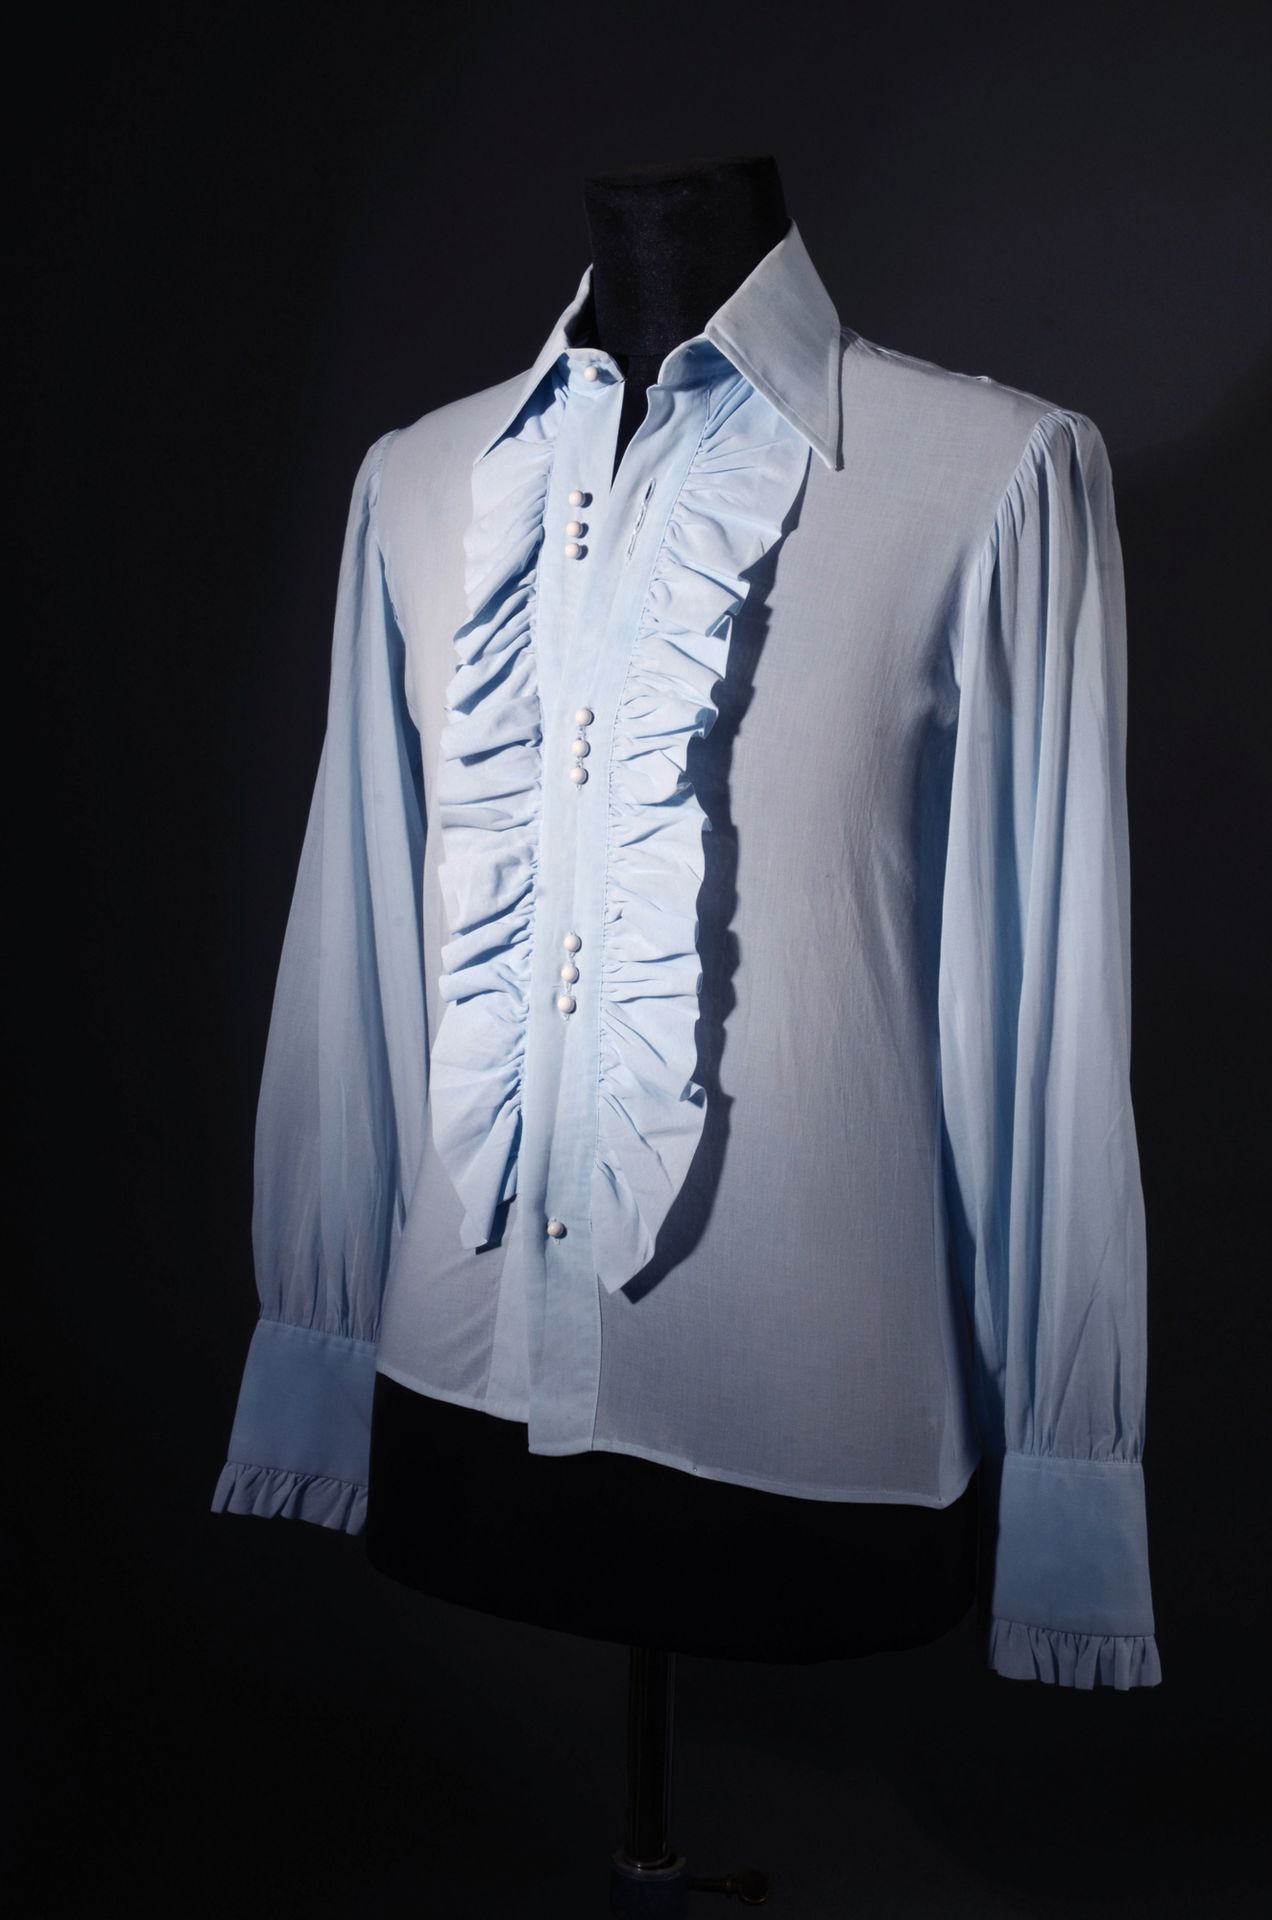 Null 迈克-布兰特
1件荷叶边衬衫，棉质珍珠棉，天蓝色，被艺术家多次用于舞台、电视和宣传工作室的拍摄。1974年在时装屋皮埃尔-巴尔曼的工作室制作。
状态良&hellip;